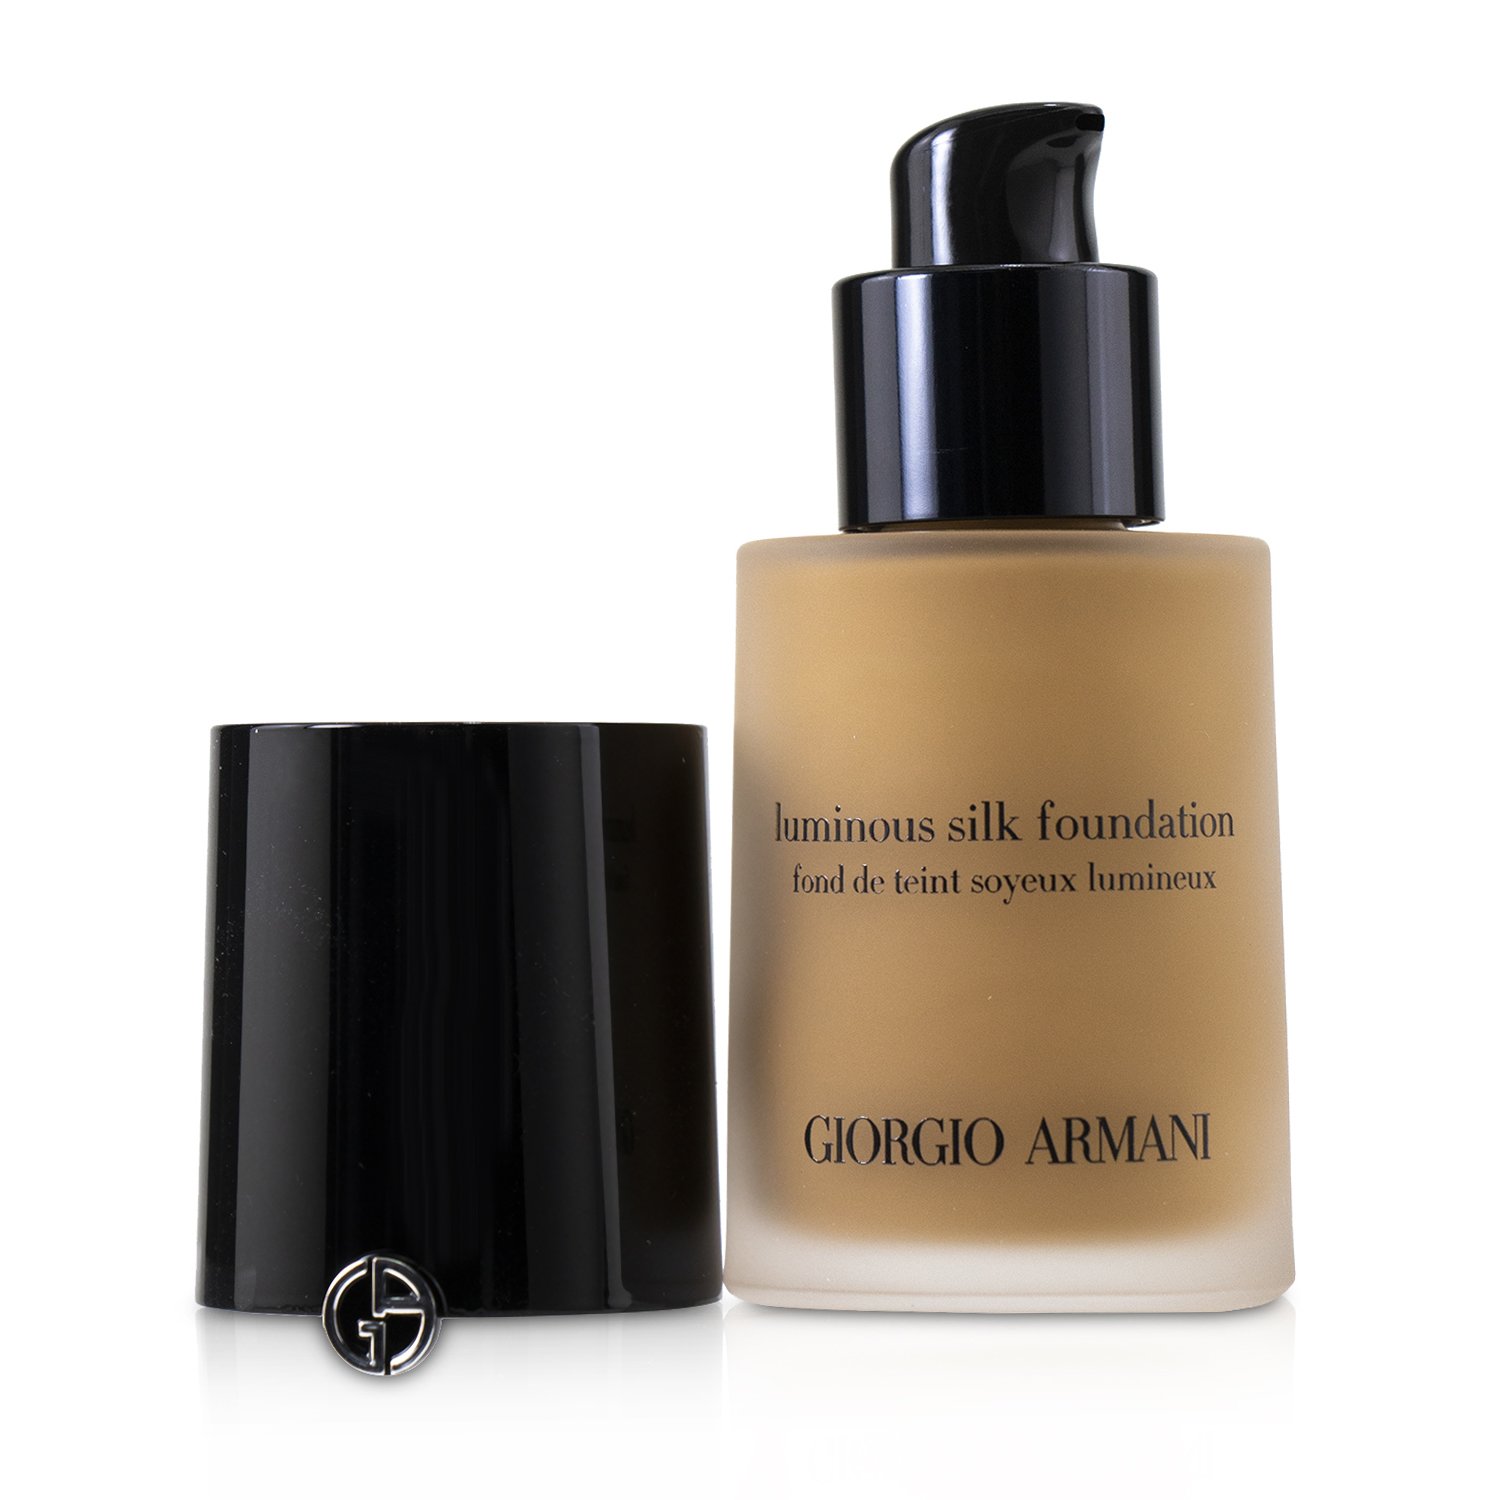 giorgio armani luminous silk foundation ingredients